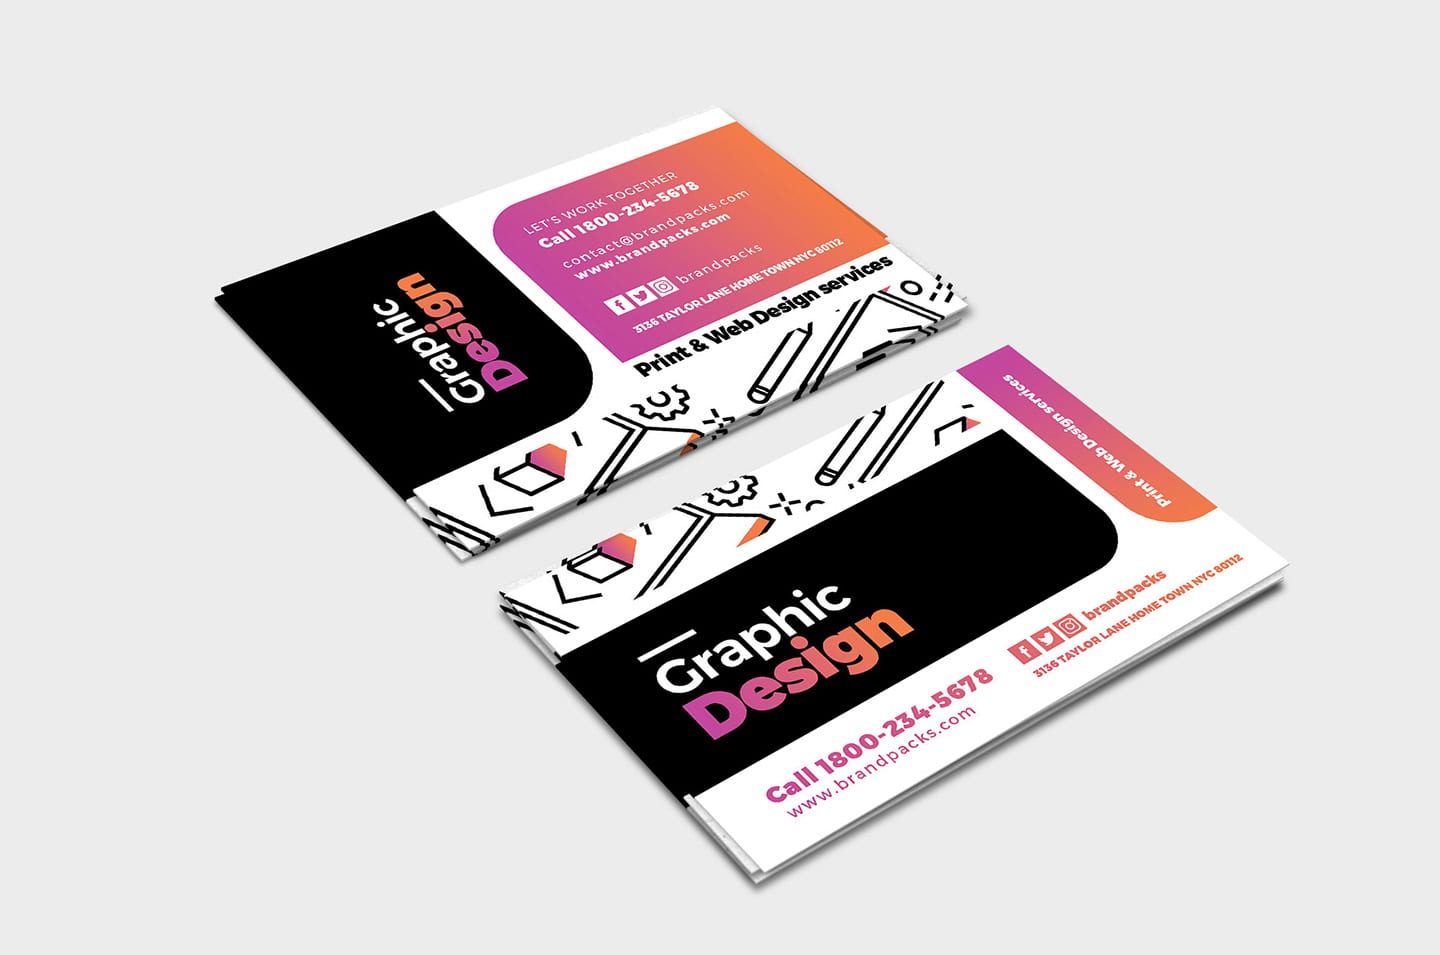 Web Design Business Cards Templates